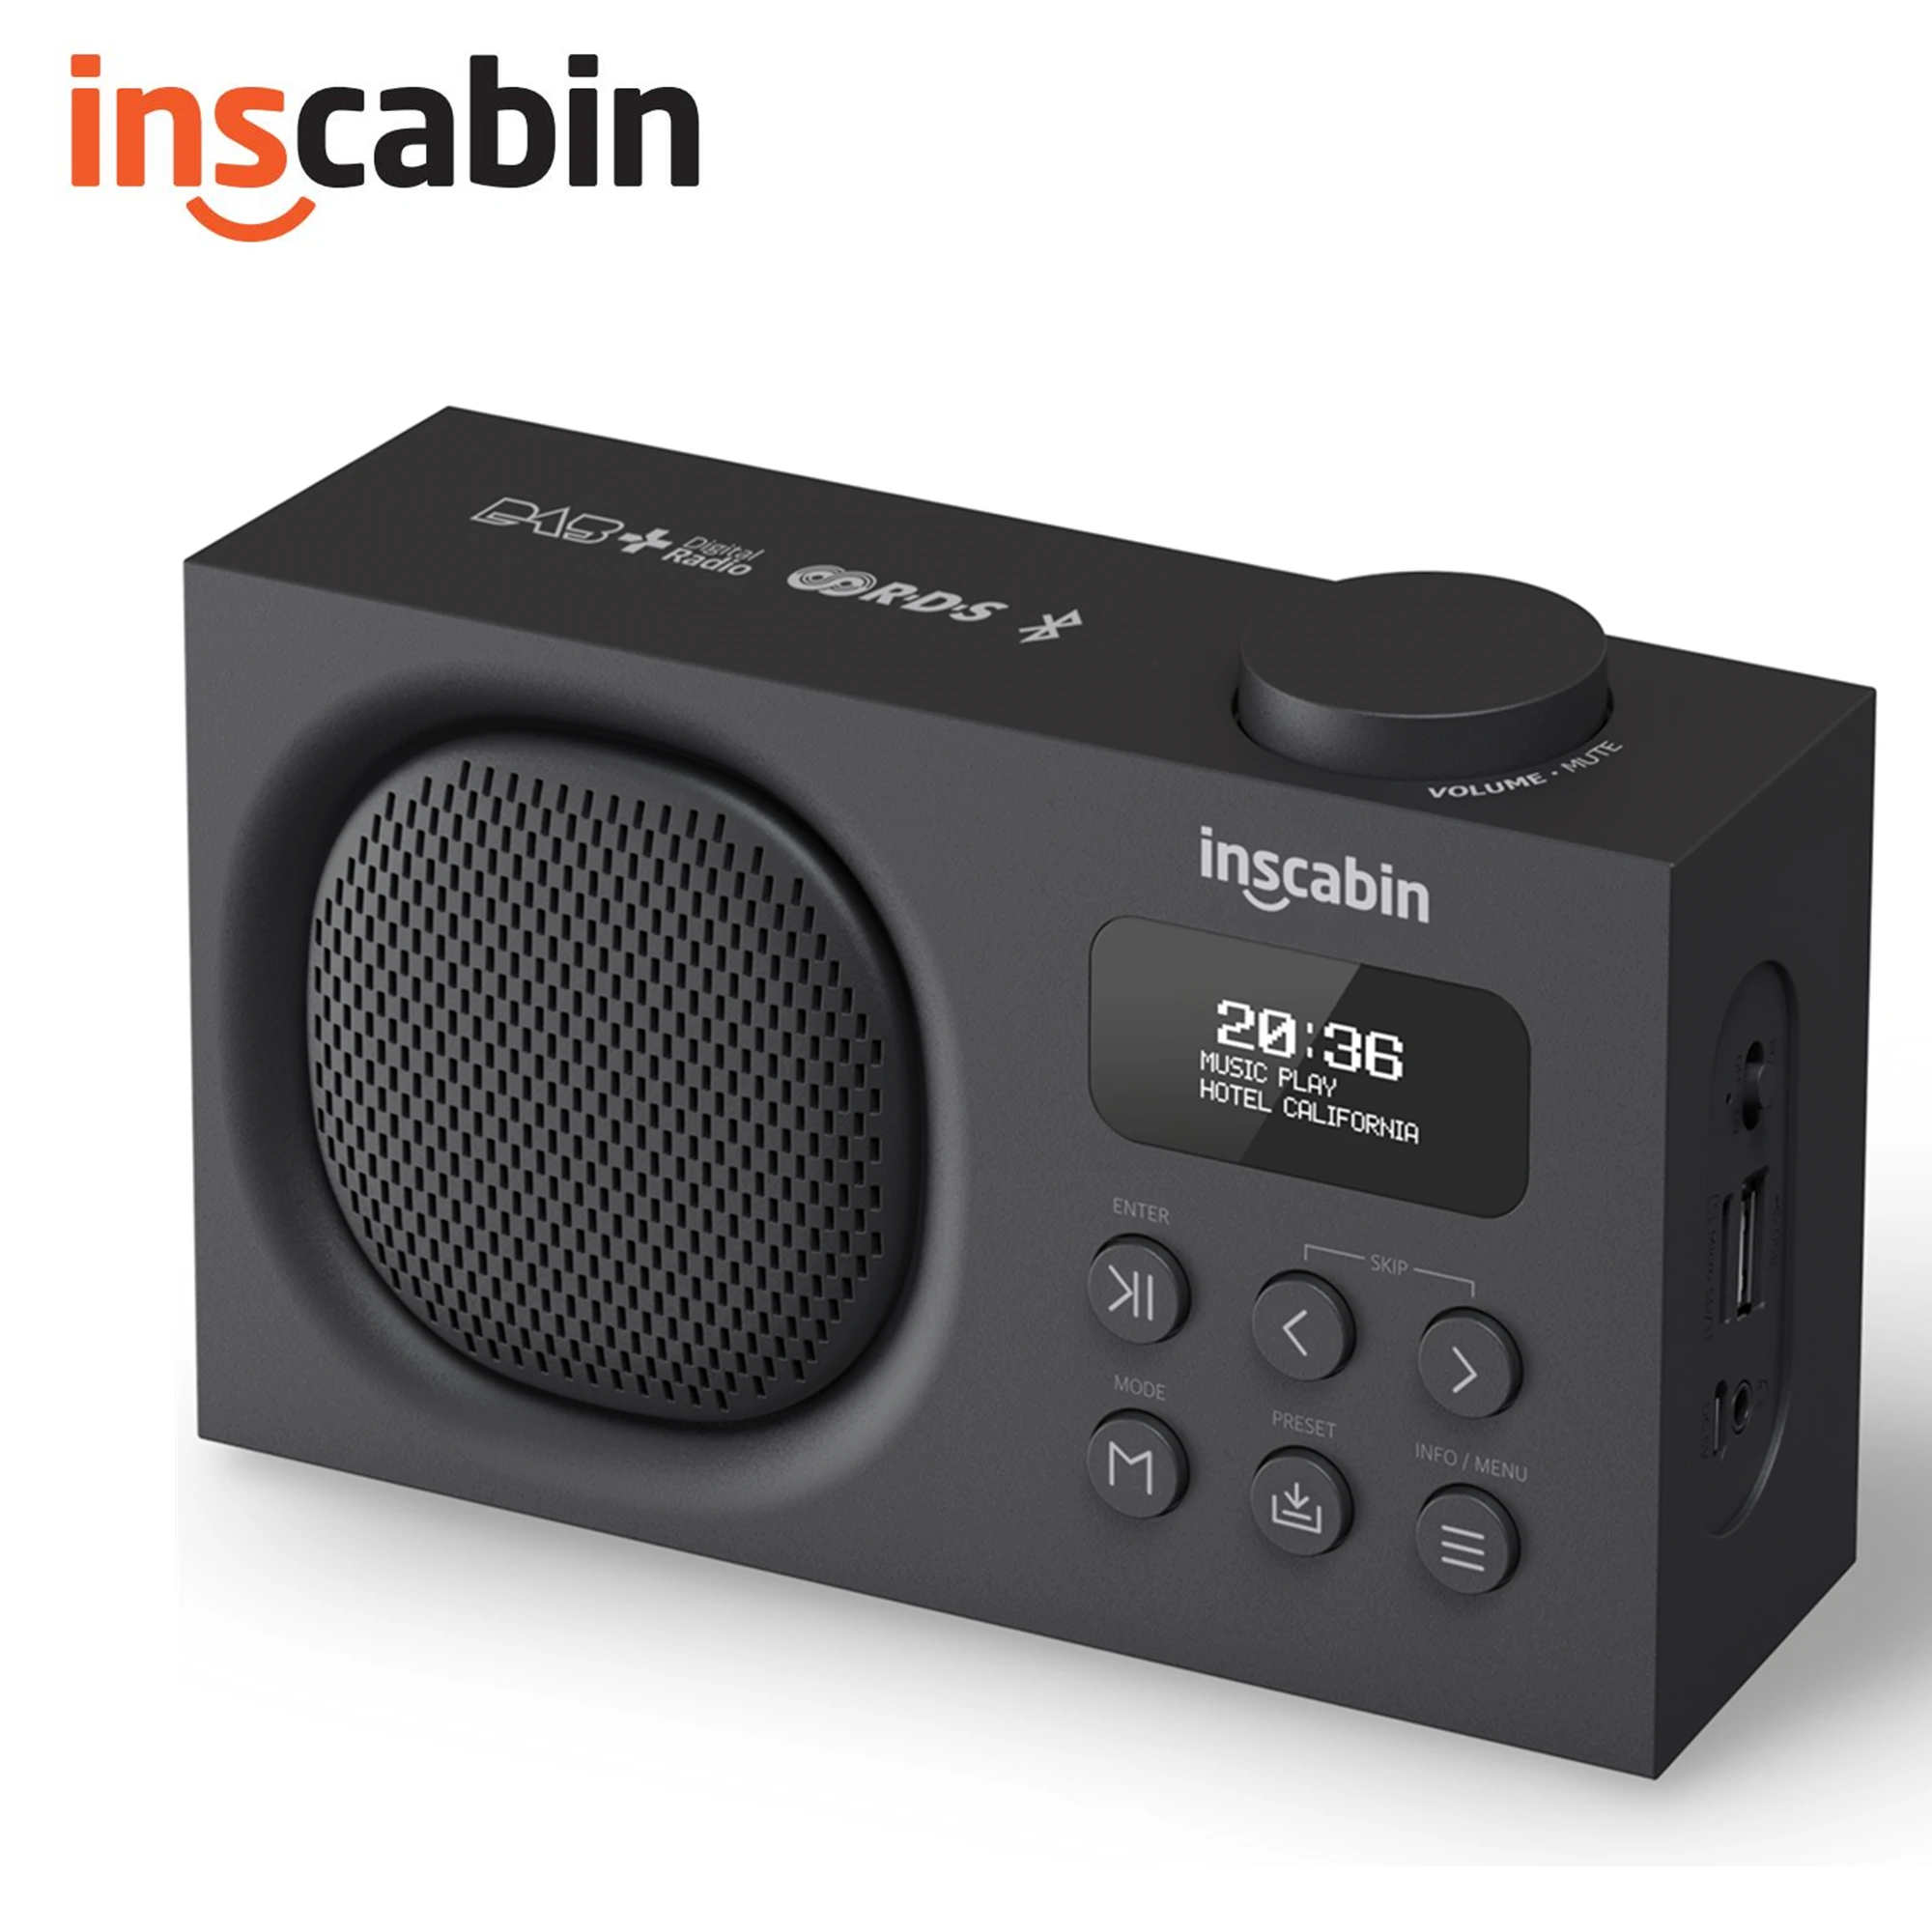 Inscabin-Radio Digital portátil P2/P9, DAB/DAB + FM, altavoz inalámbrico con Bluetooth, reloj despertador Dual, TF/USB